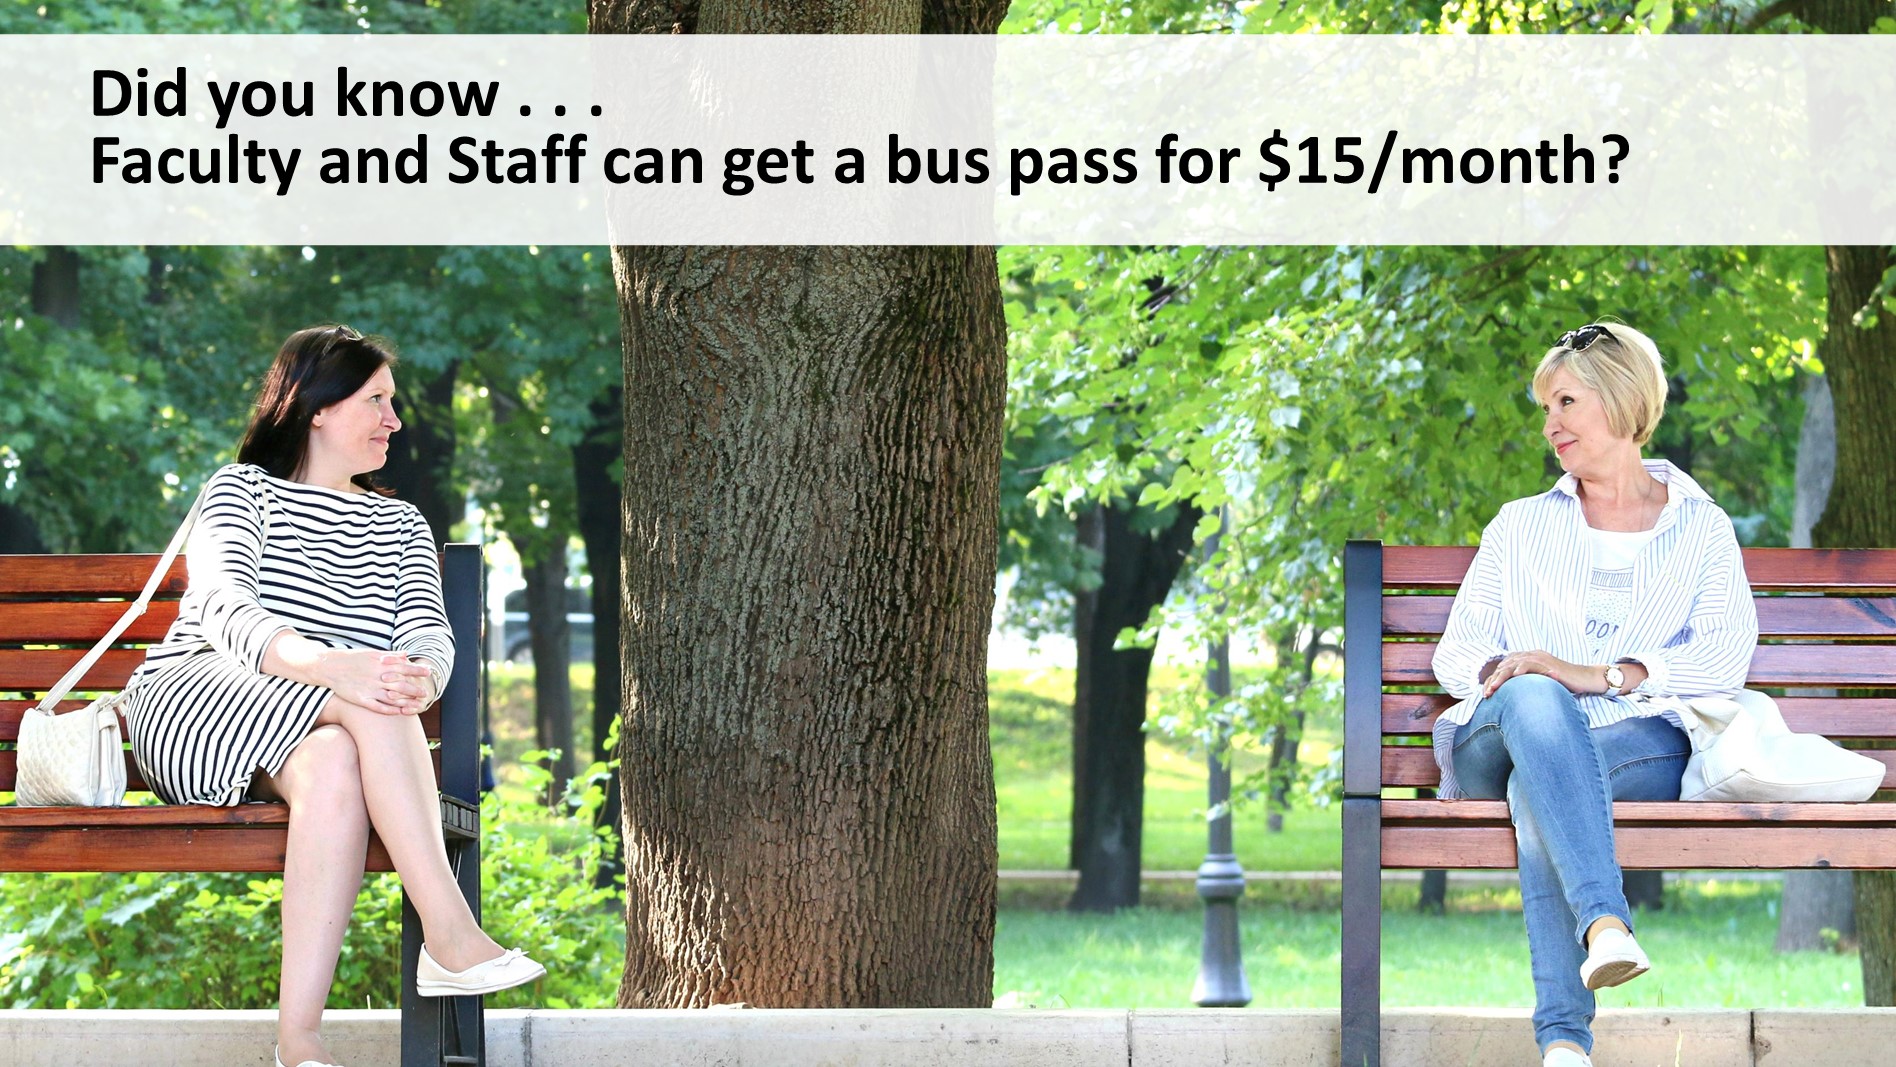 employee bus passes $15 per month